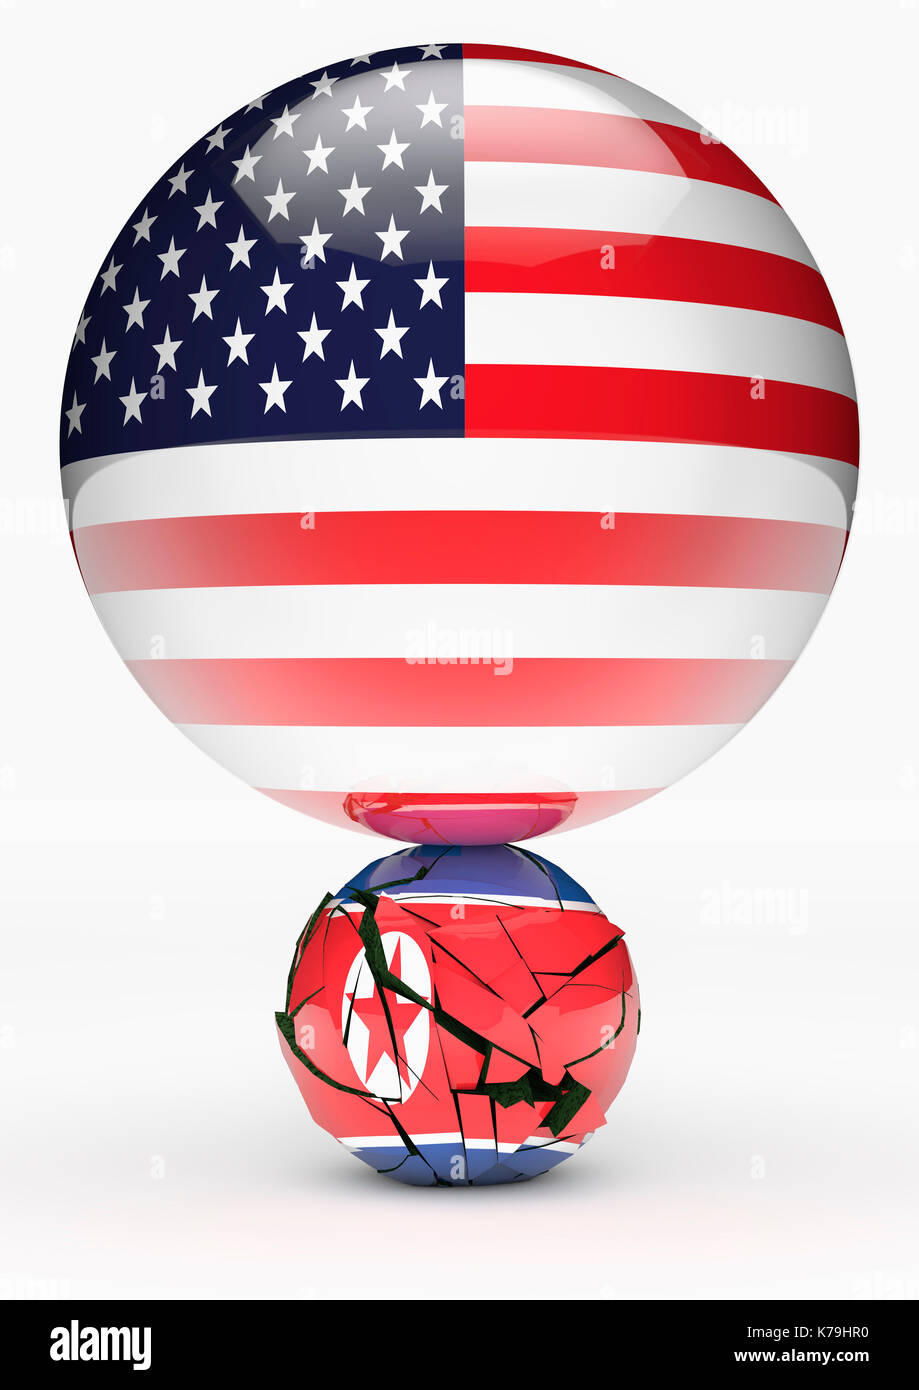 USA NORTH KOREA flag crushed concept. American flag global super power dominance. Stock Photo